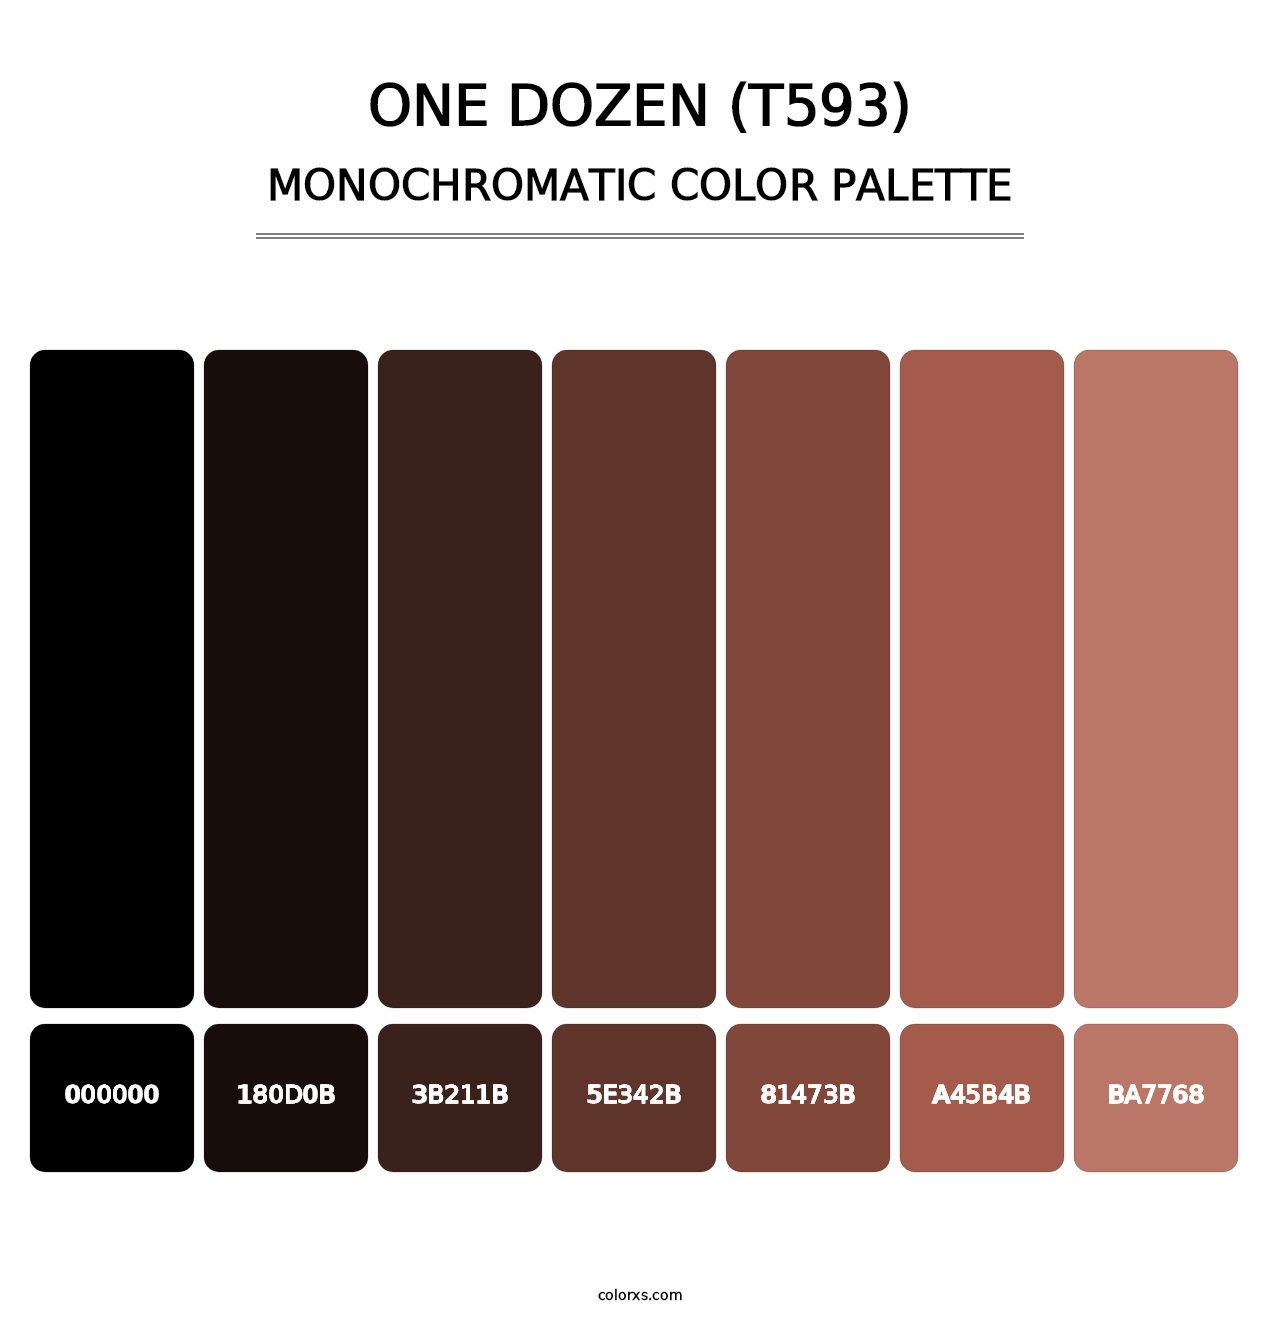 One Dozen (T593) - Monochromatic Color Palette